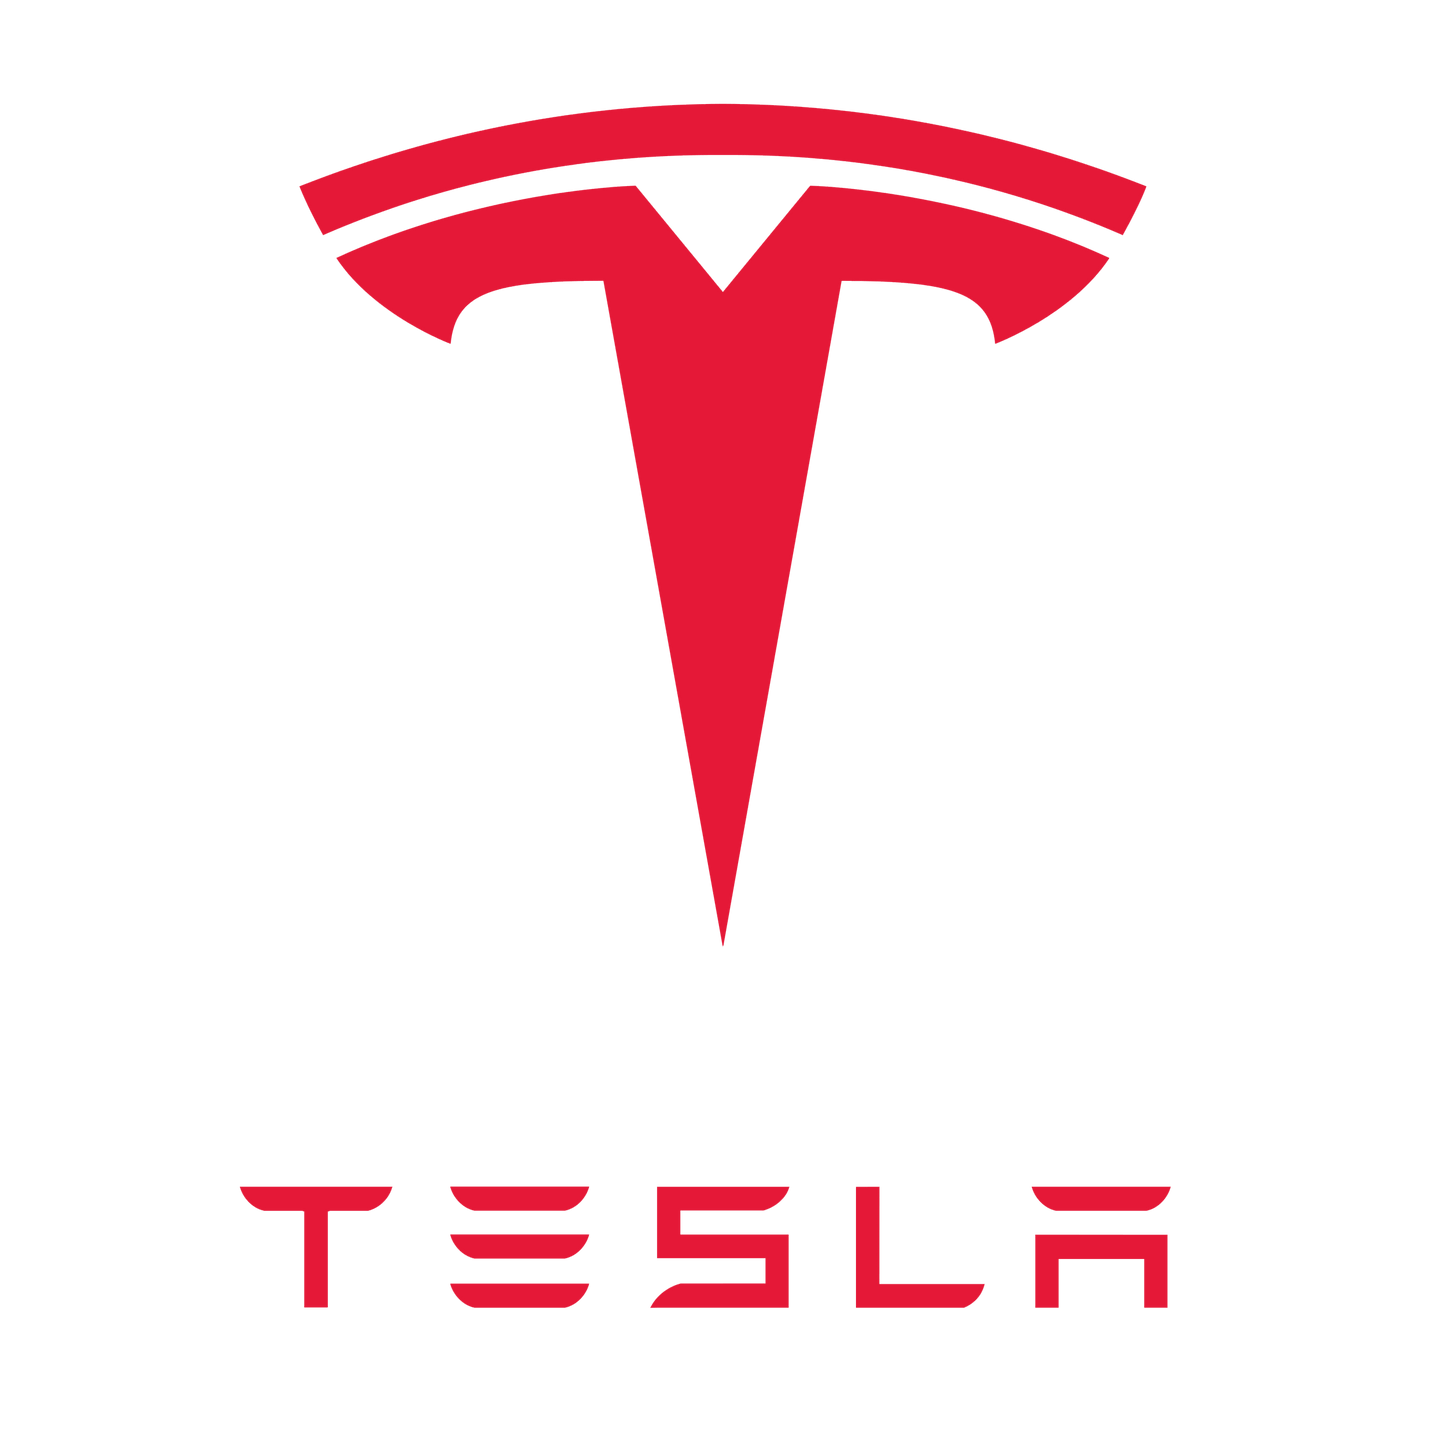 Tesla (Nasdaq: TSLA) Three Statement Financial Model with Forecast (2004-2026)